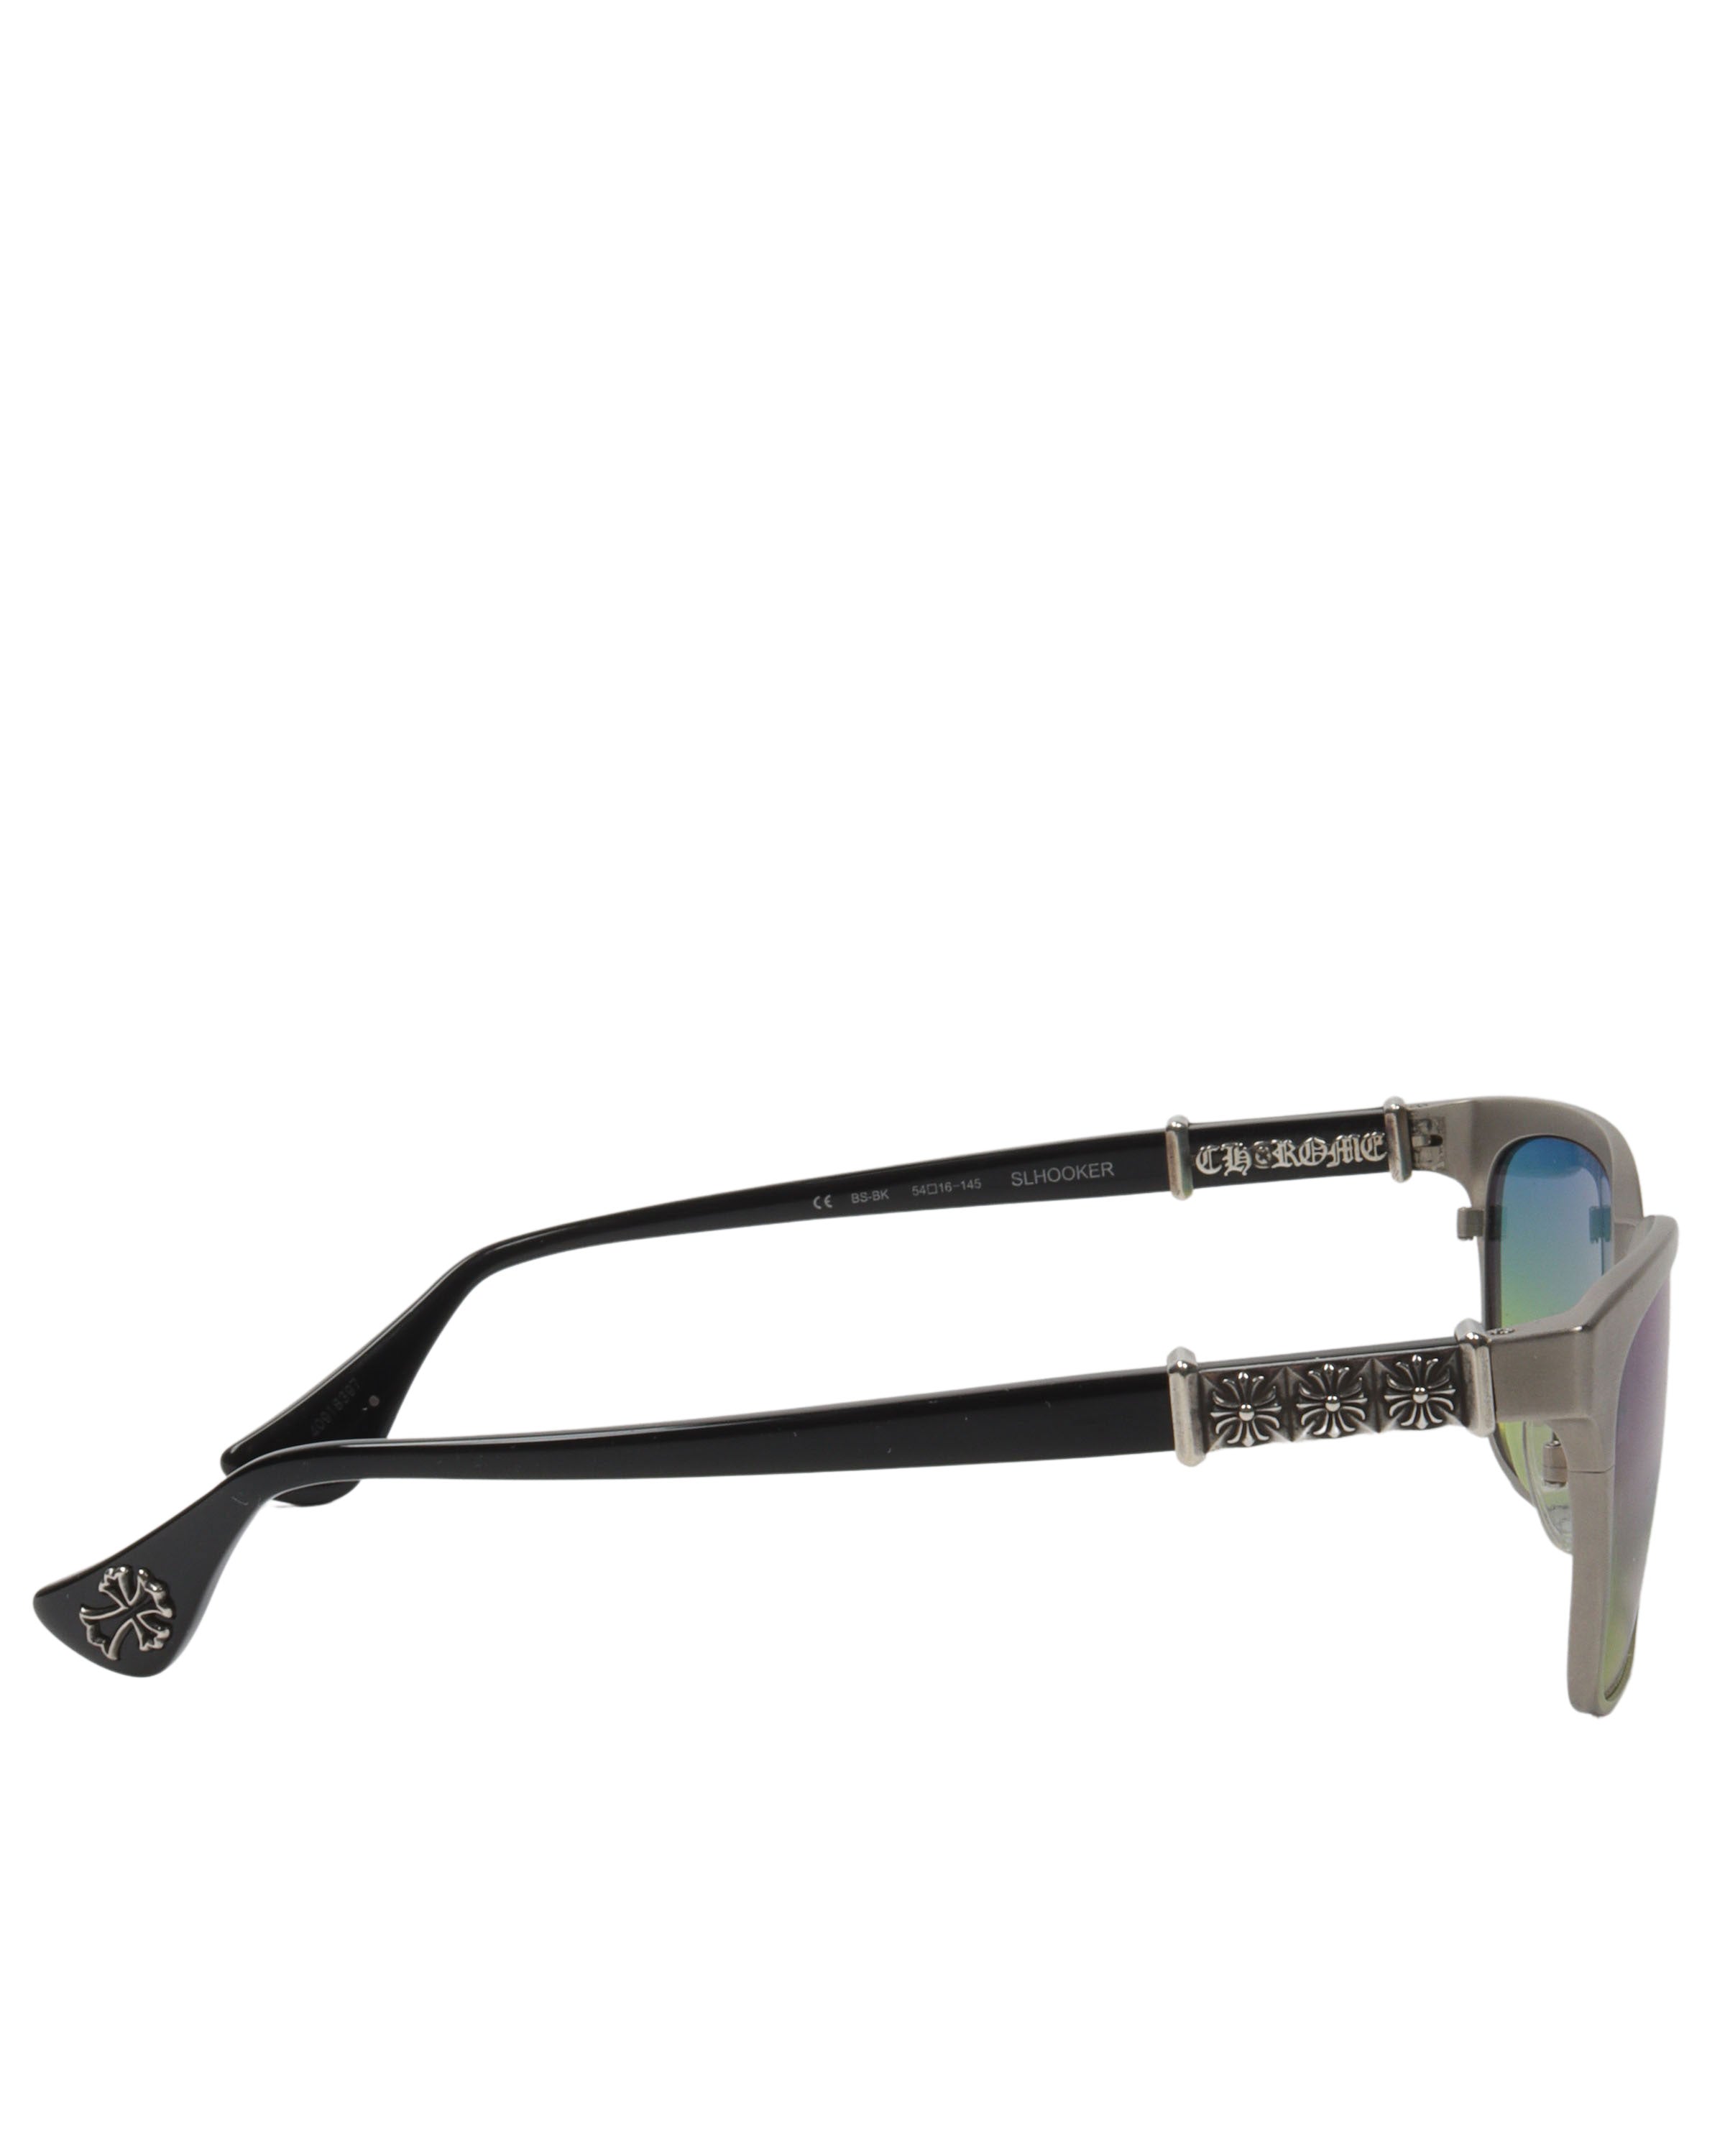 "SLHOOKER" Sunglasses